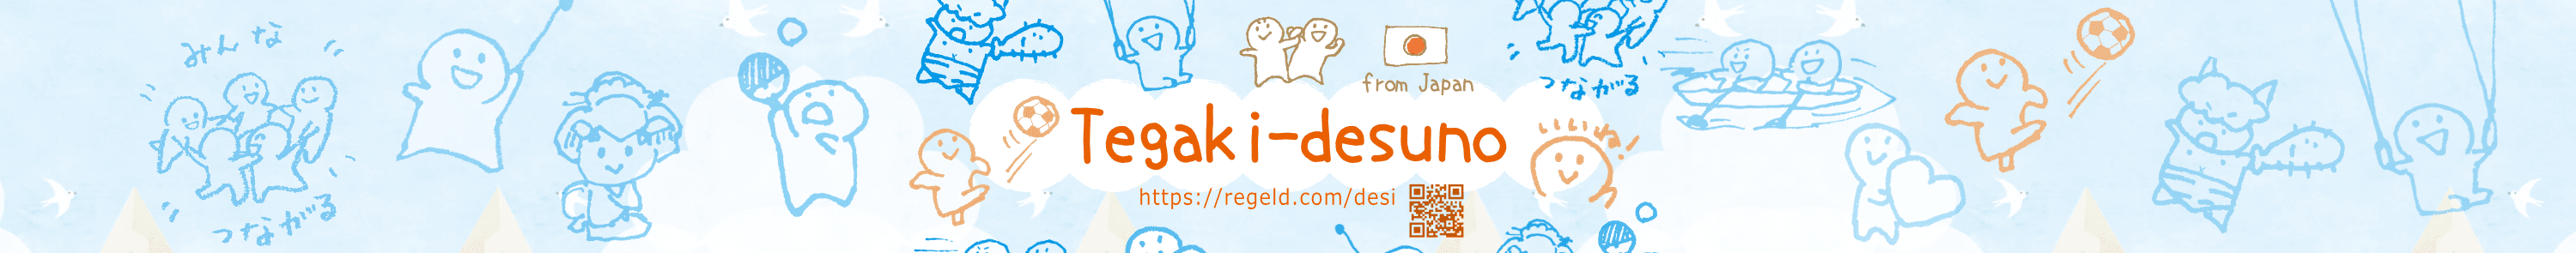 Tegaki-desuno illustrations